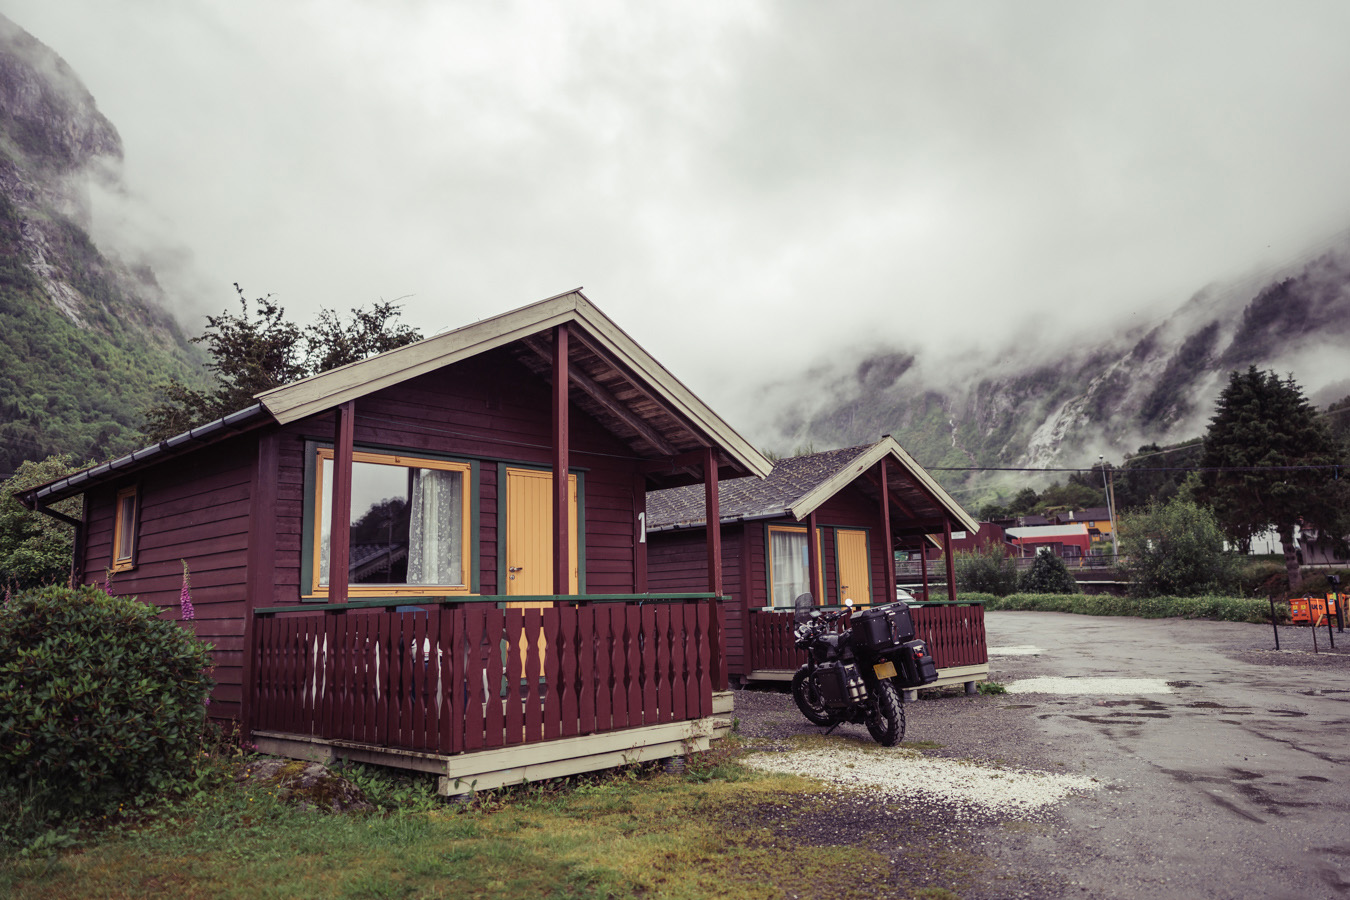 Photograph of Bondhus, Norway by Alex Nichol